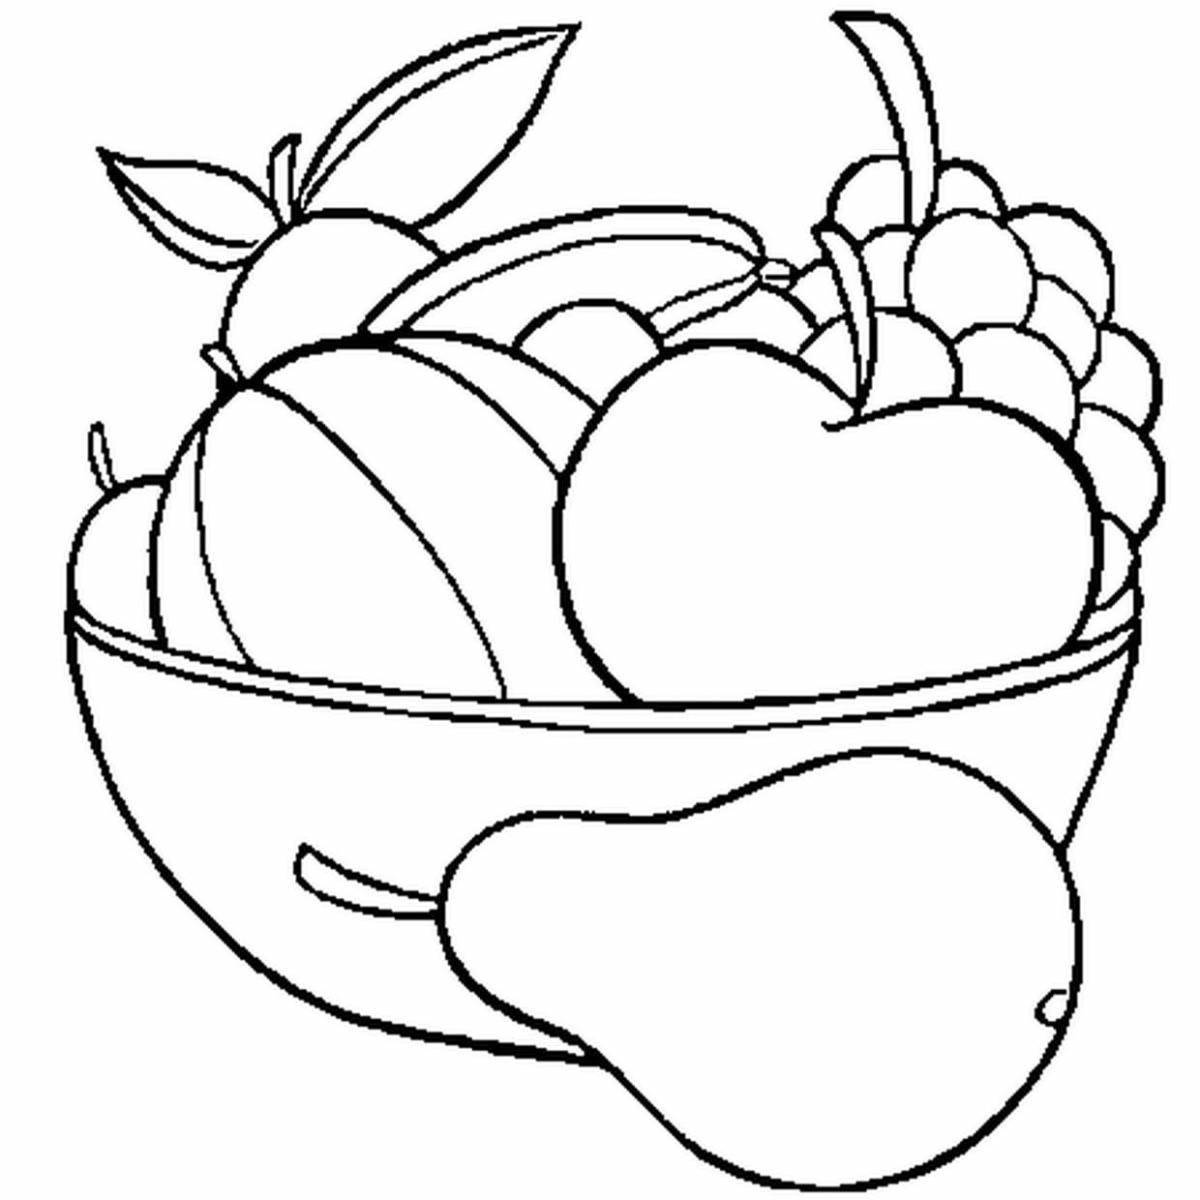 Live harvest of fruits and vegetables in a basket